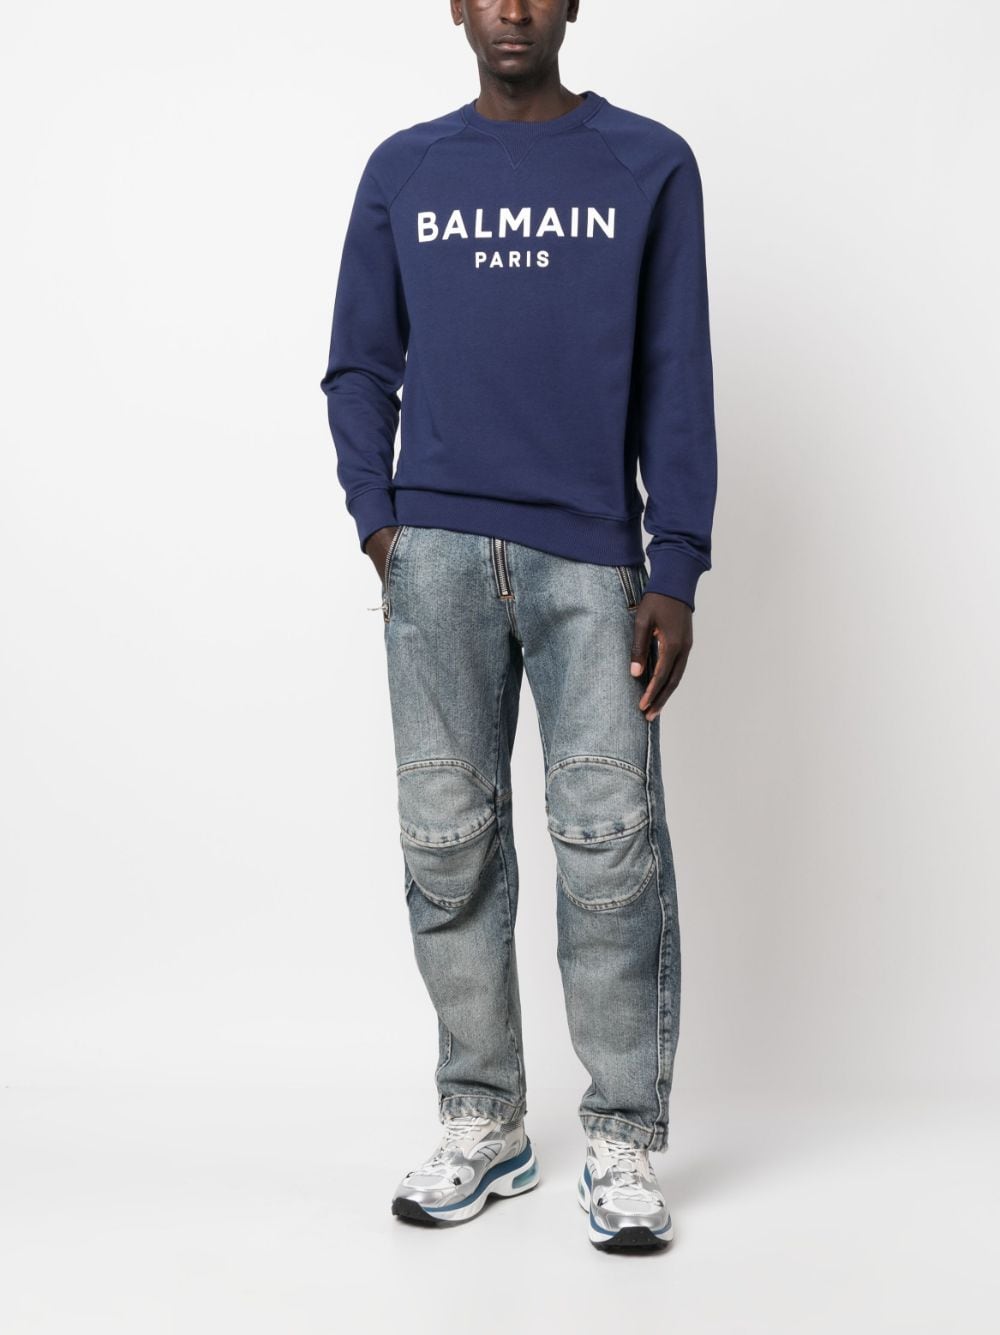 Balmain Logo Sweatshirt - Farfetch